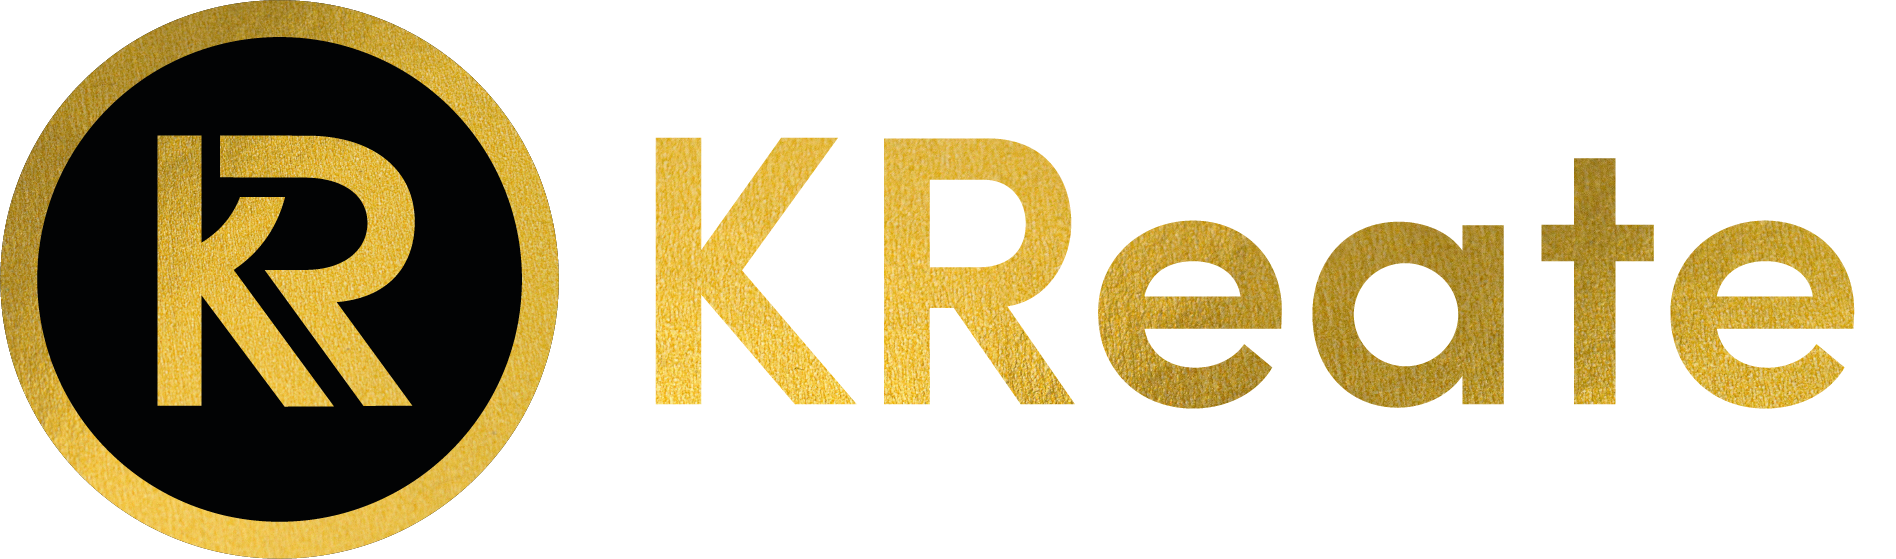 Kreate Site Logo